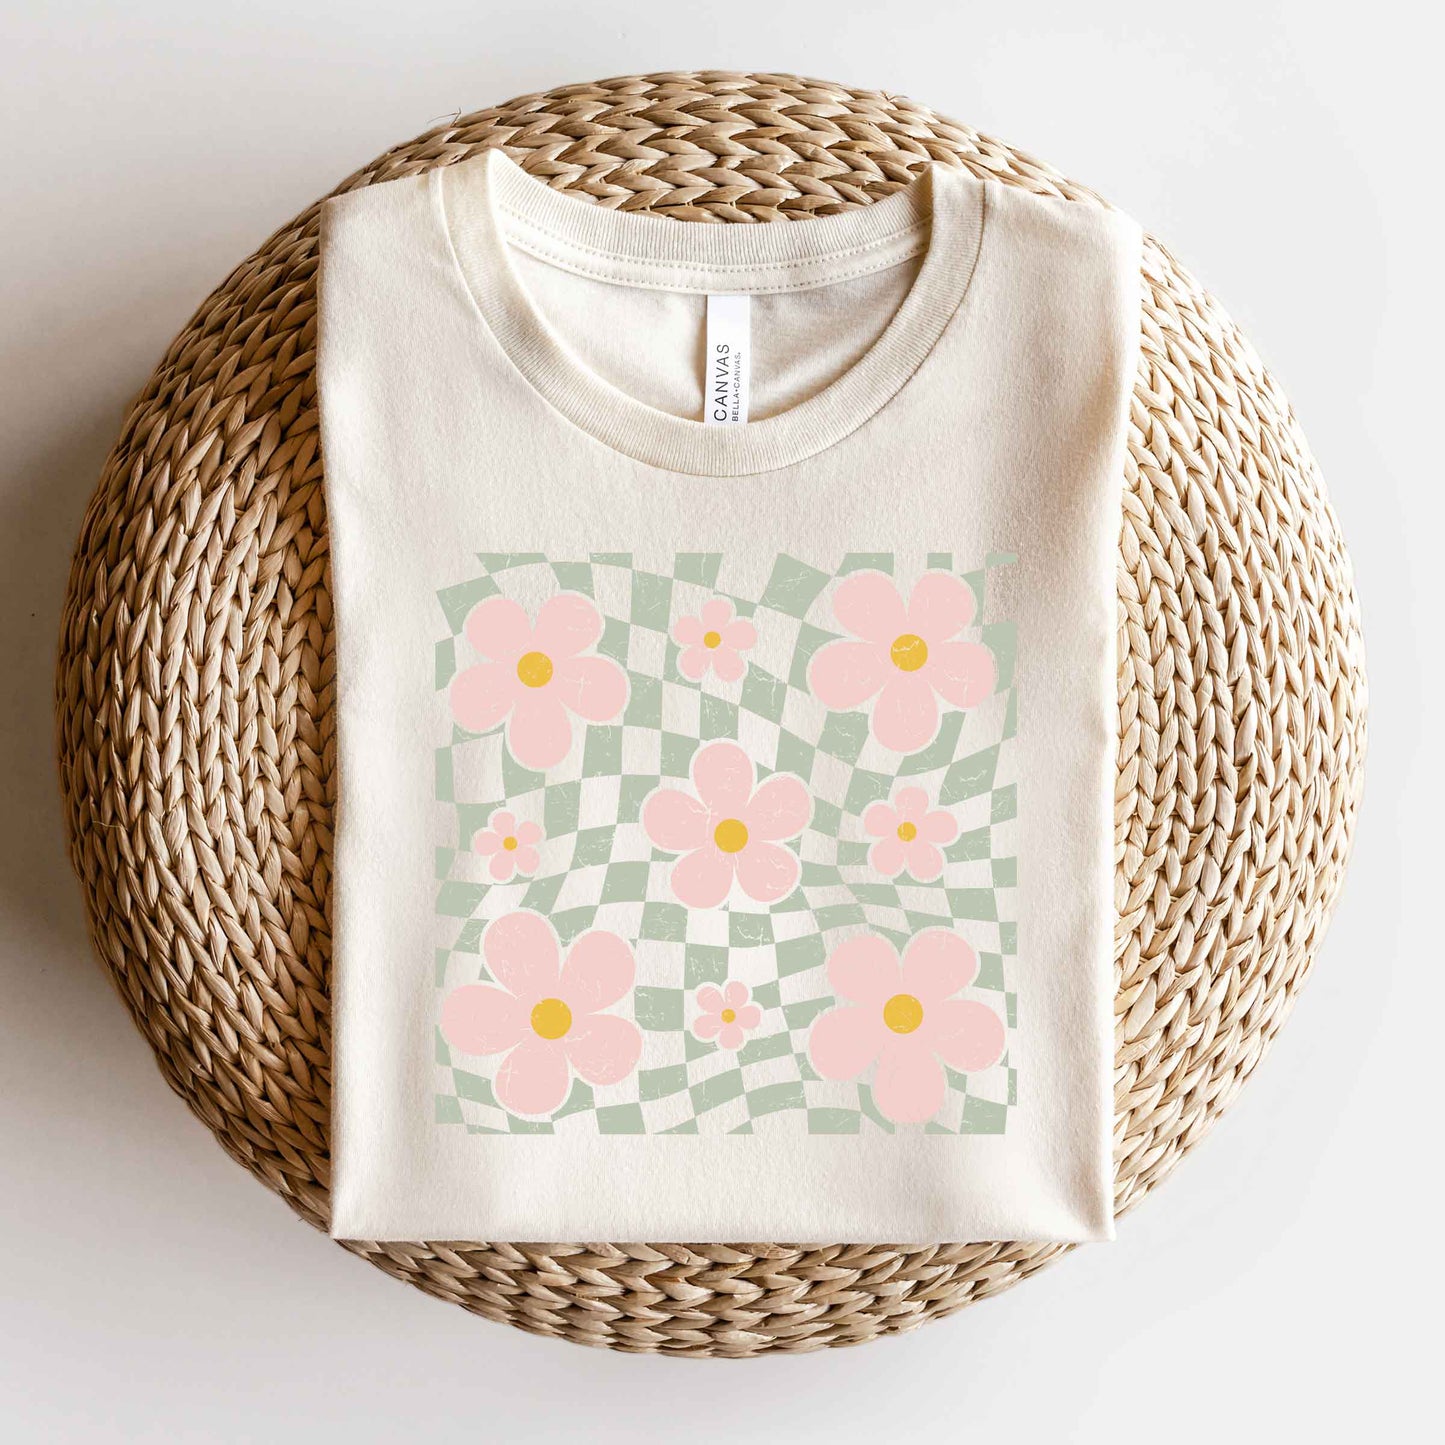 Wavy Checkered Flowers | Short Sleeve Graphic Tee